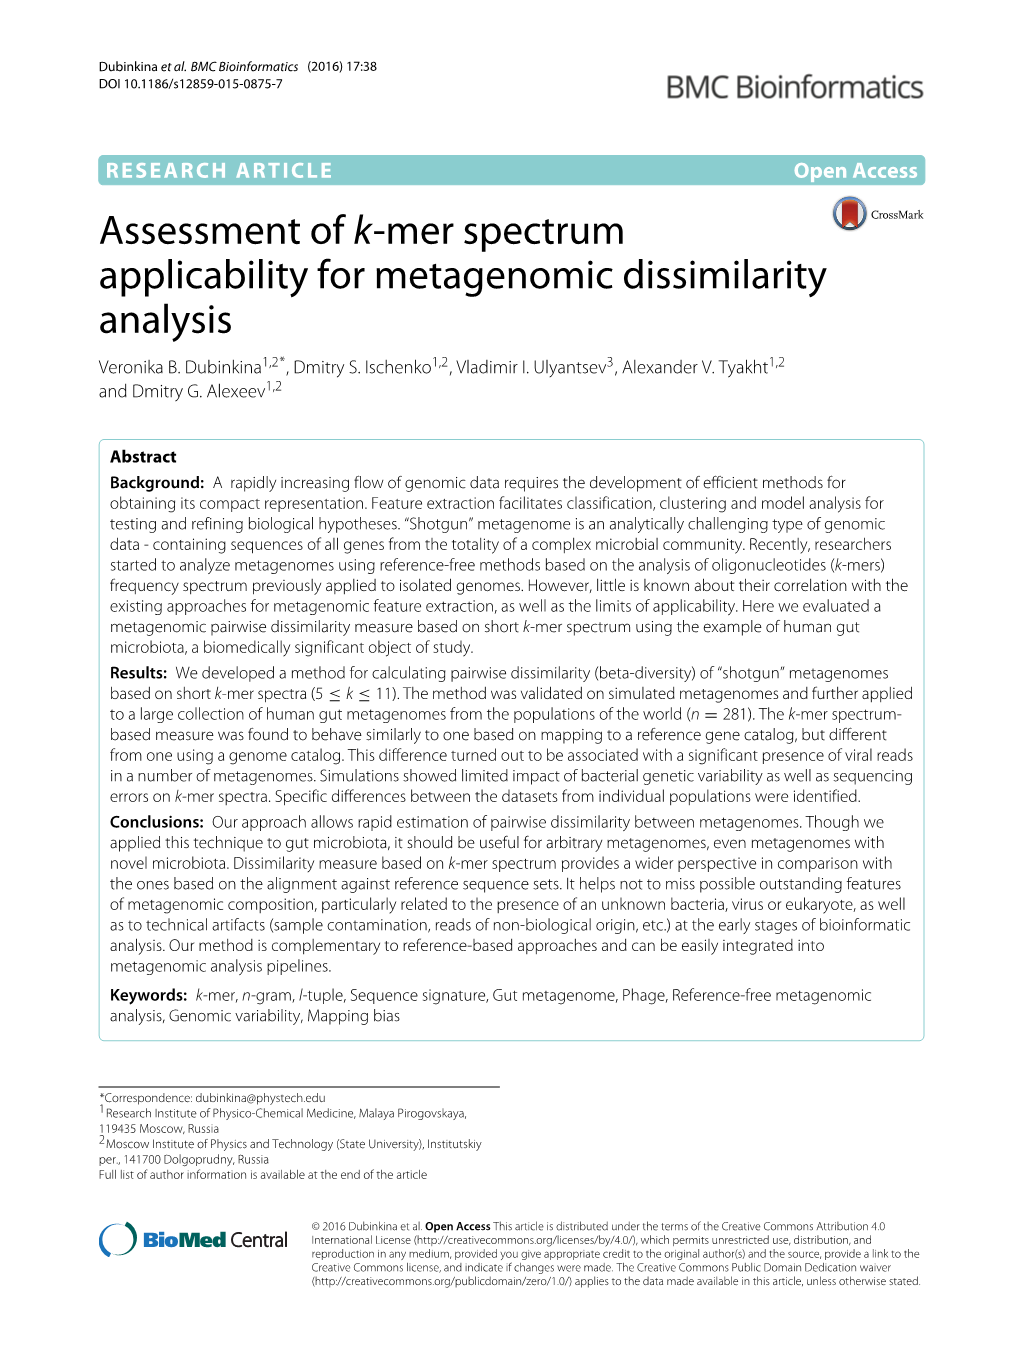 Assessment of K-Mer Spectrum Applicability for Metagenomic Dissimilarity Analysis Veronika B